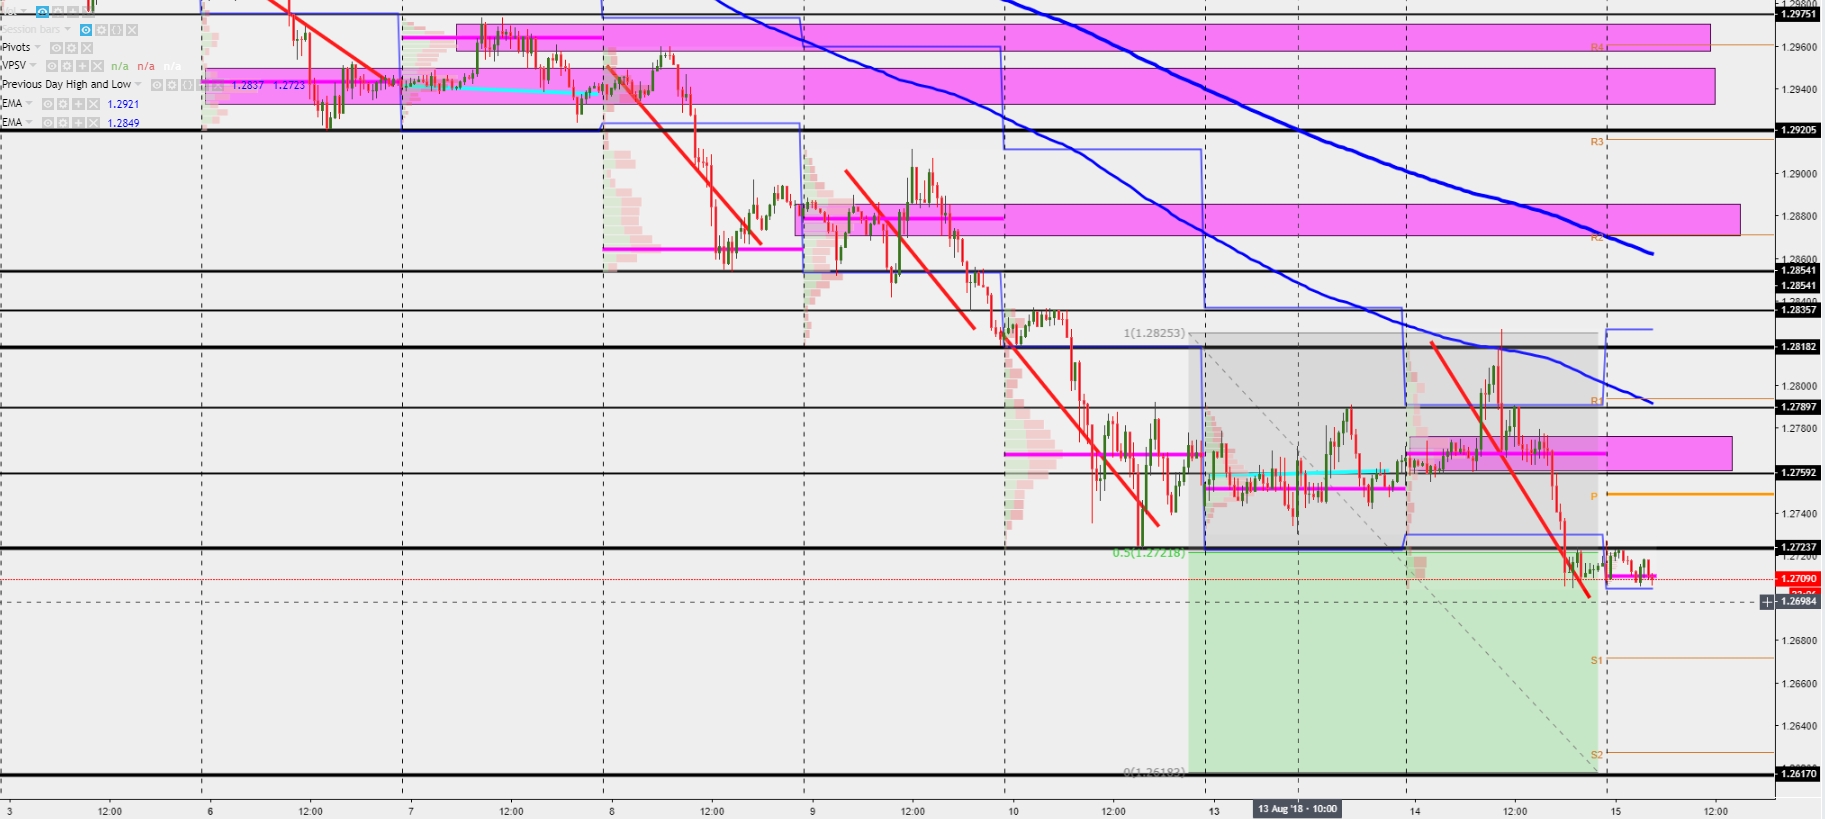 GBP/USD 30 Minute Chart